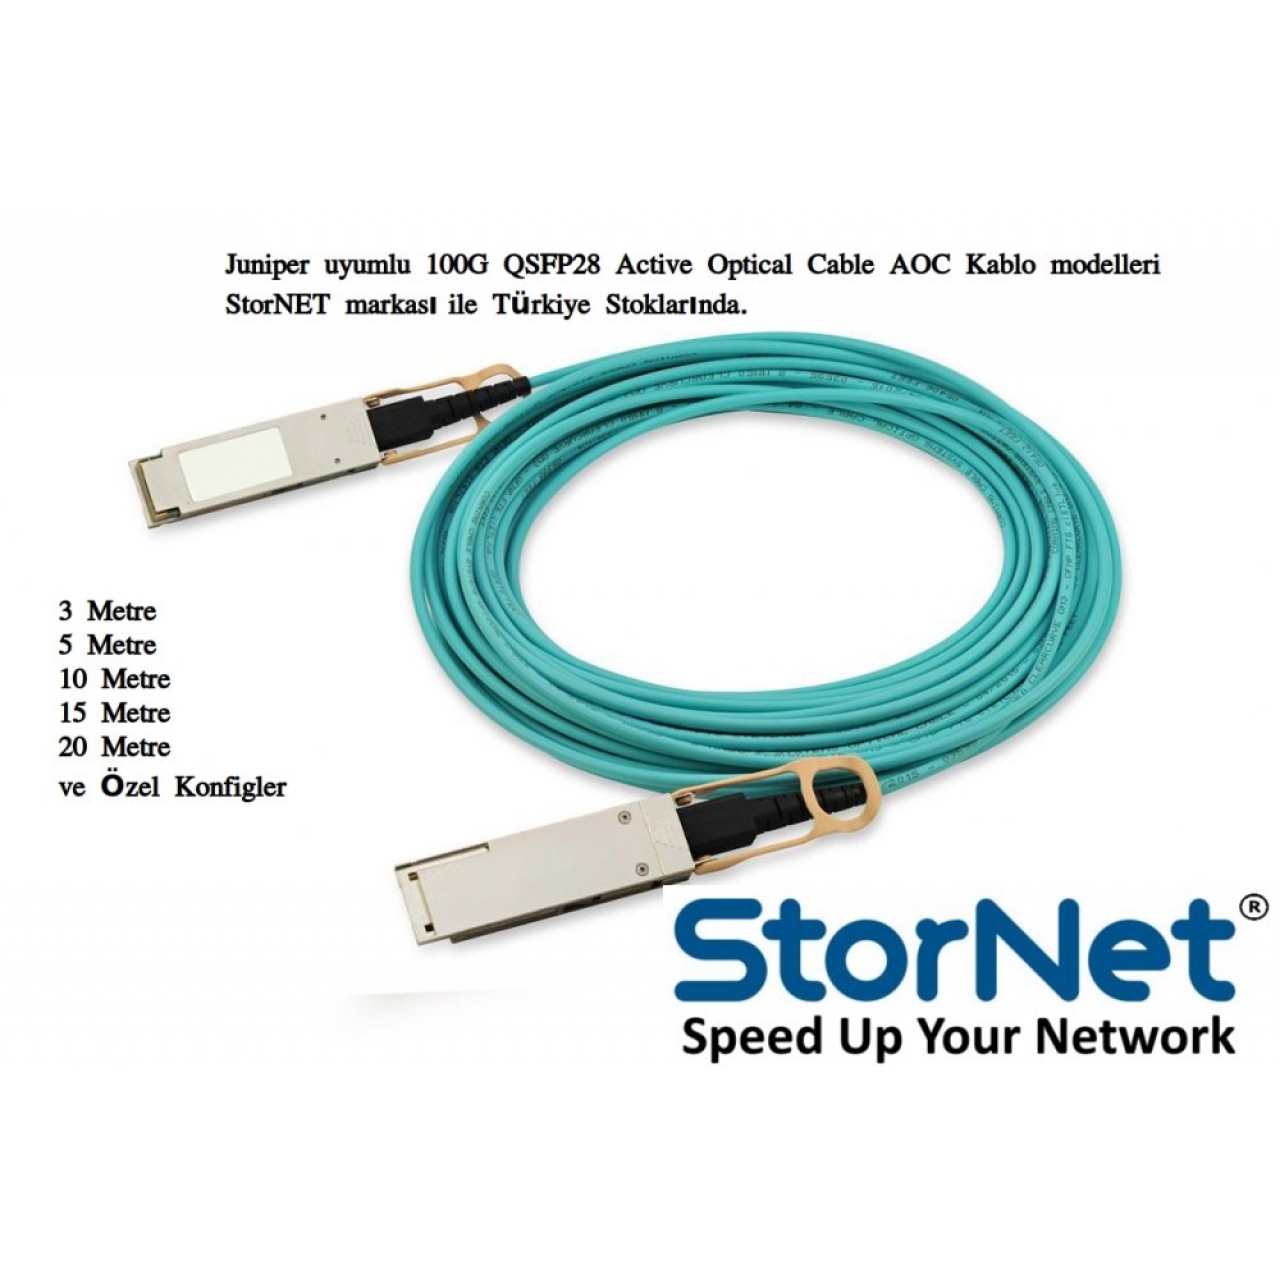 Juniper uyumlu 100G QSFP28 to QSFP28 AOC Kablo